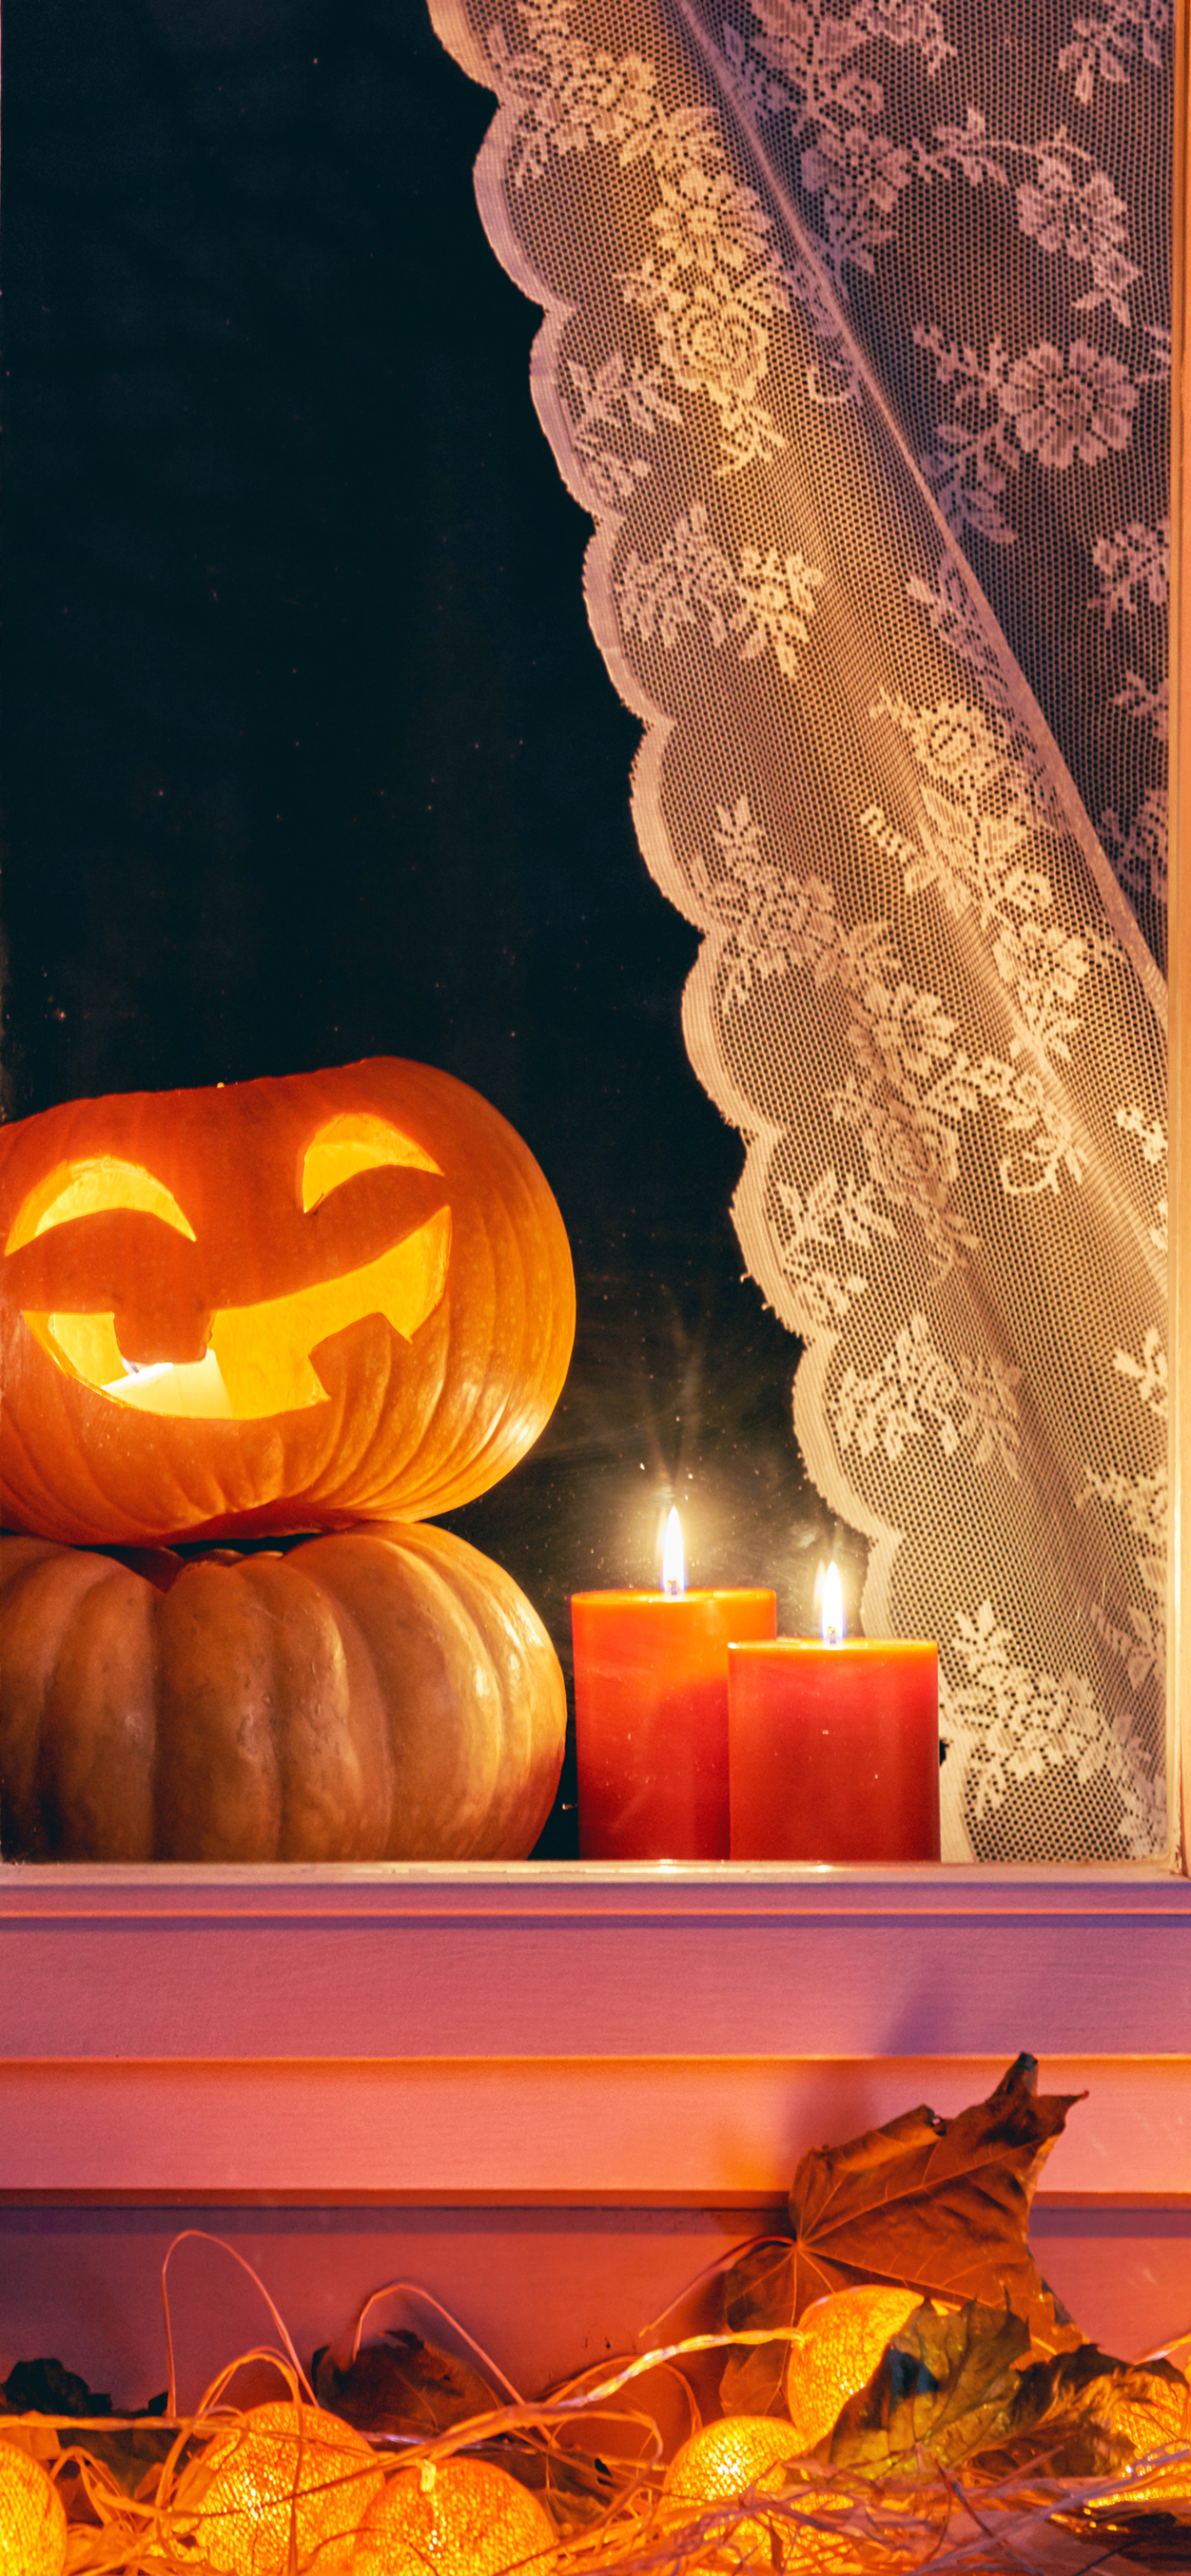 Handy-Wallpaper Feiertage, Halloween, Kürbis, Kerze, Jack O' Laterne, Kürbislaterne kostenlos herunterladen.